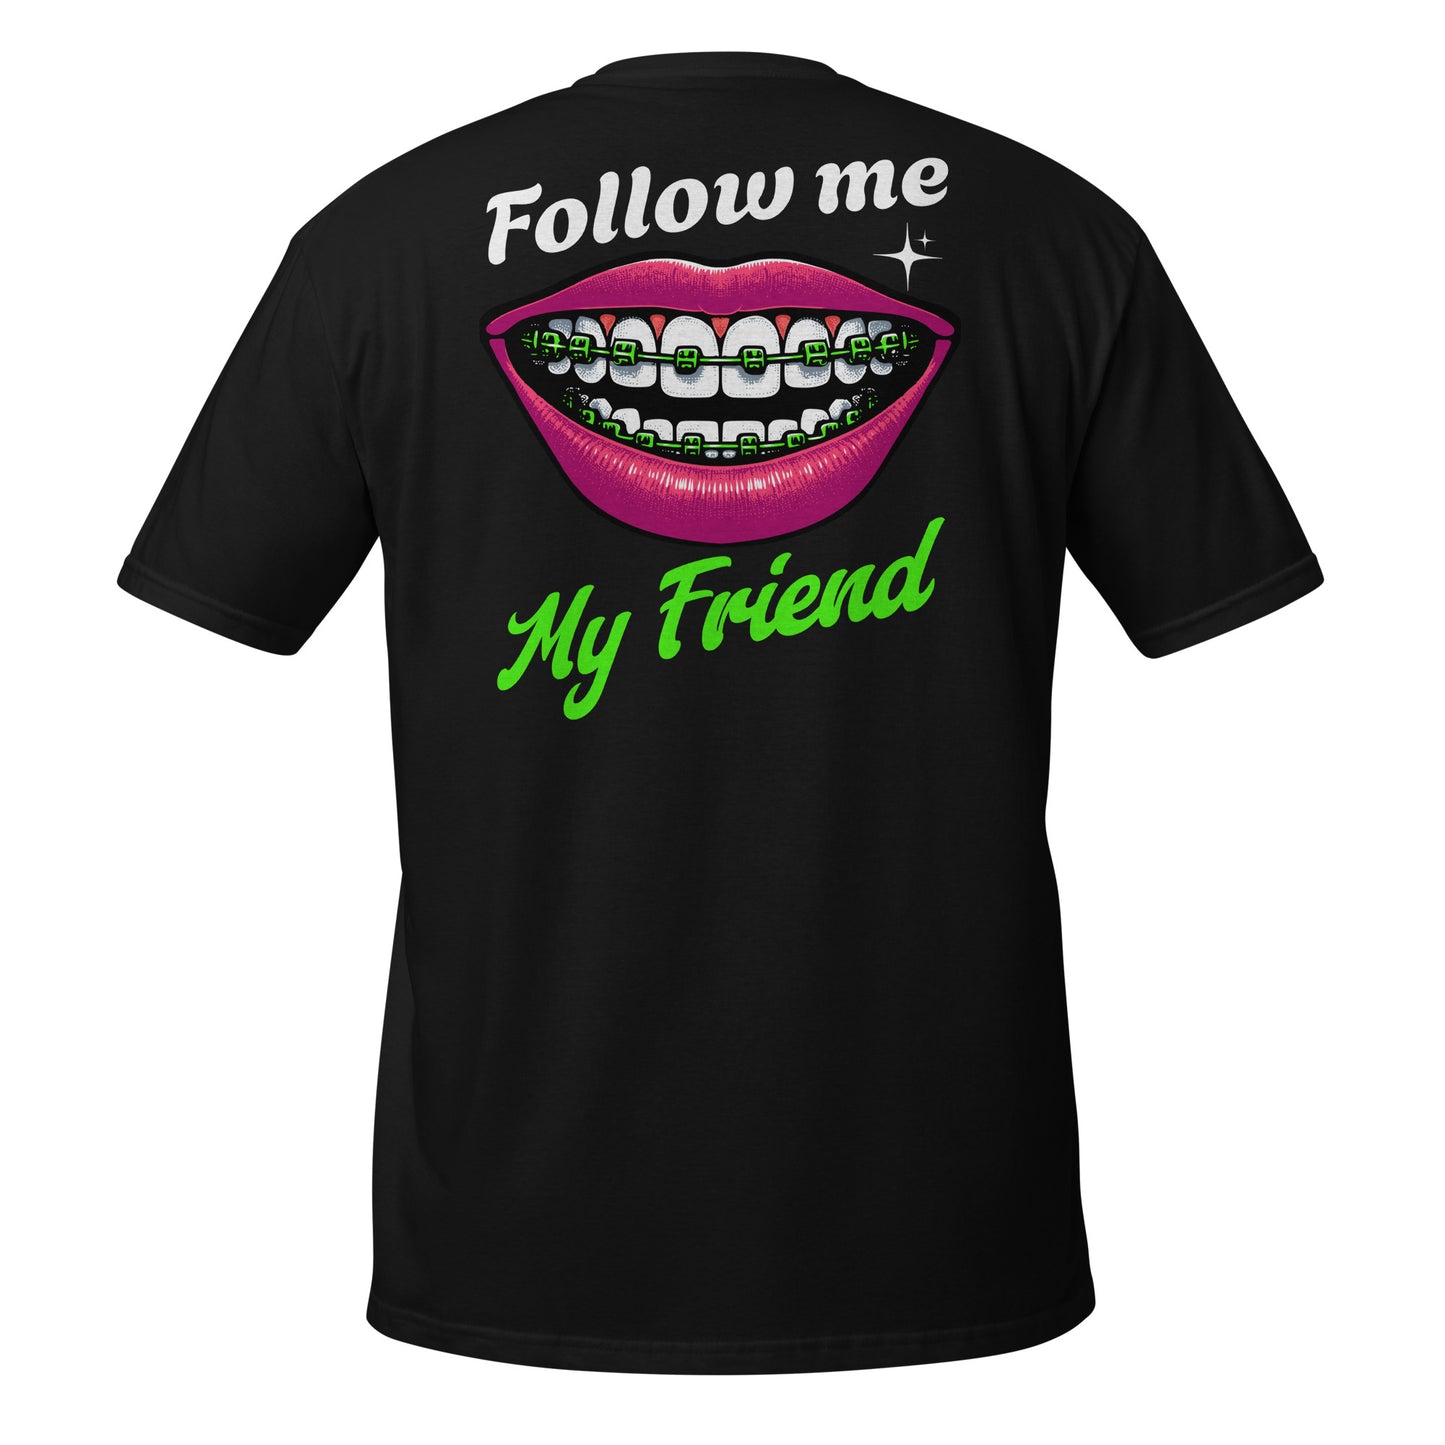 Follow me my friend - Camiseta unisex